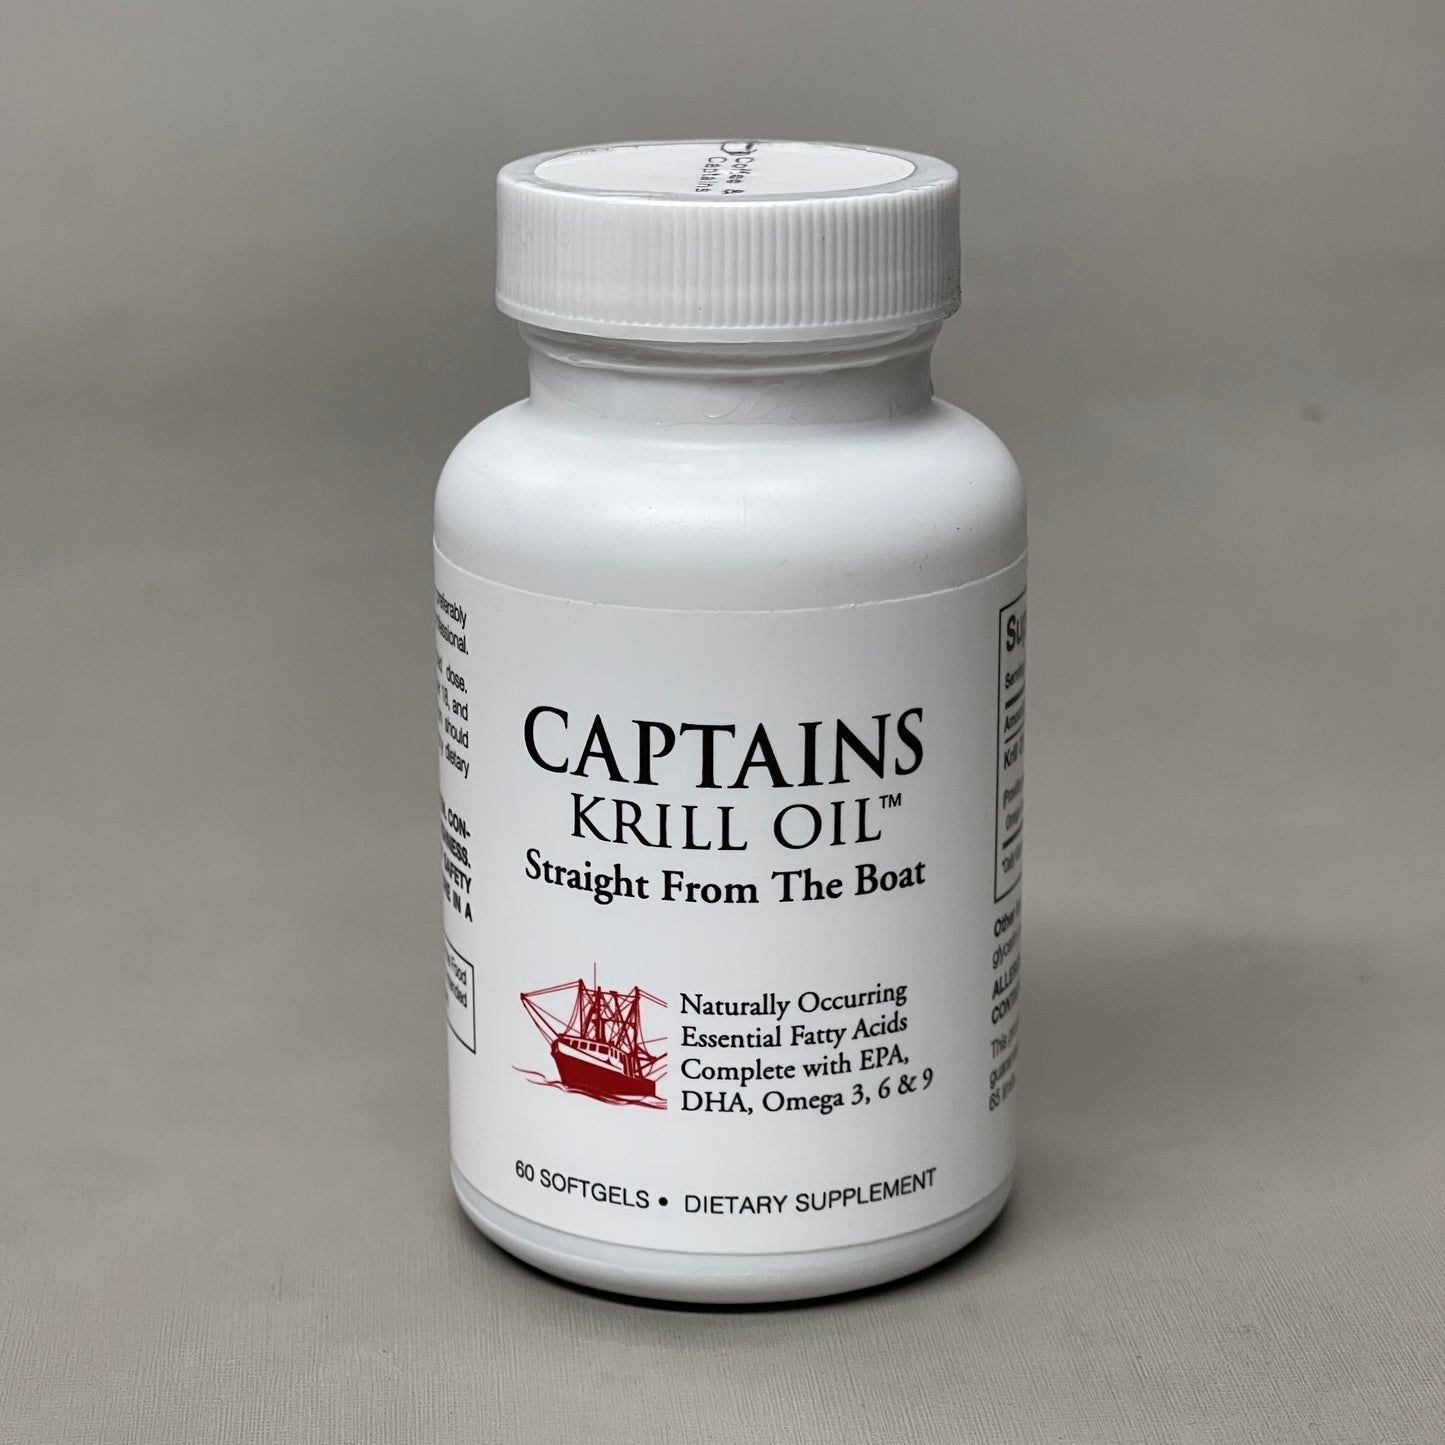 CAPTAIN KRILLS Krill Oil Dietary Supplement Omega 3, 6, 9 - 60 Softgels BB 11/23 (New)